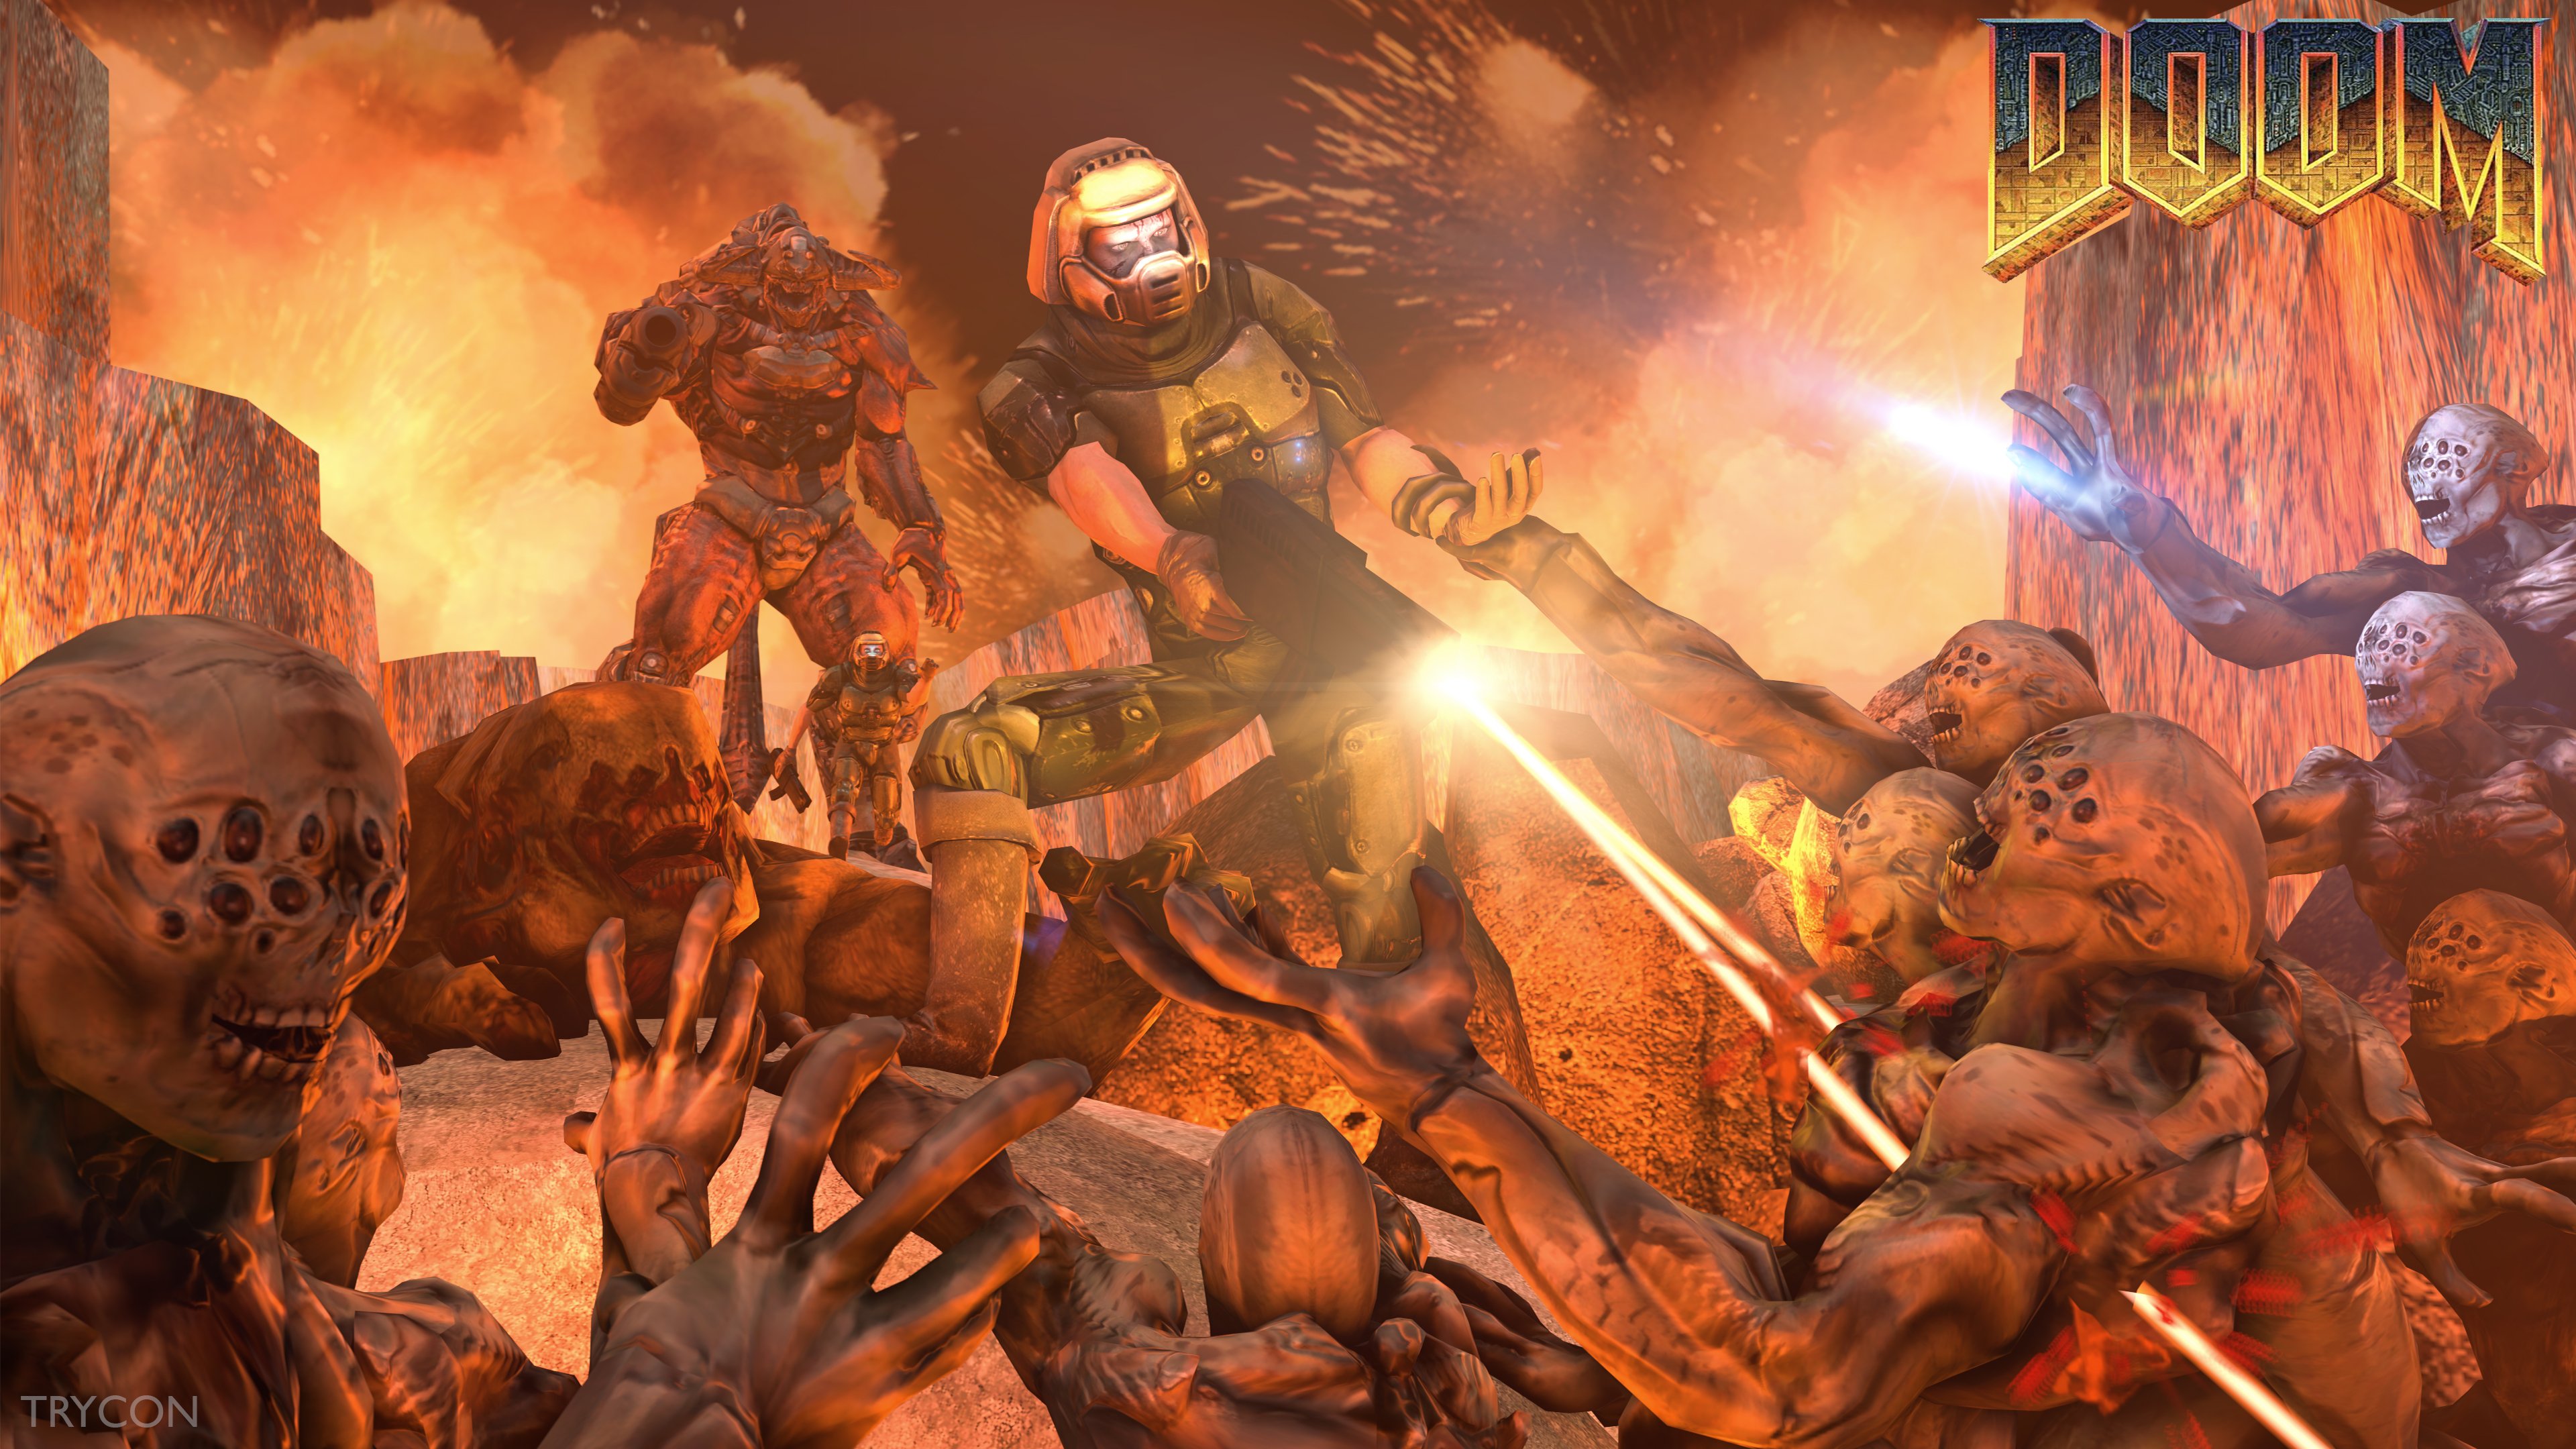  sci fi futuristic warrior zombie poster battle wallpaper background